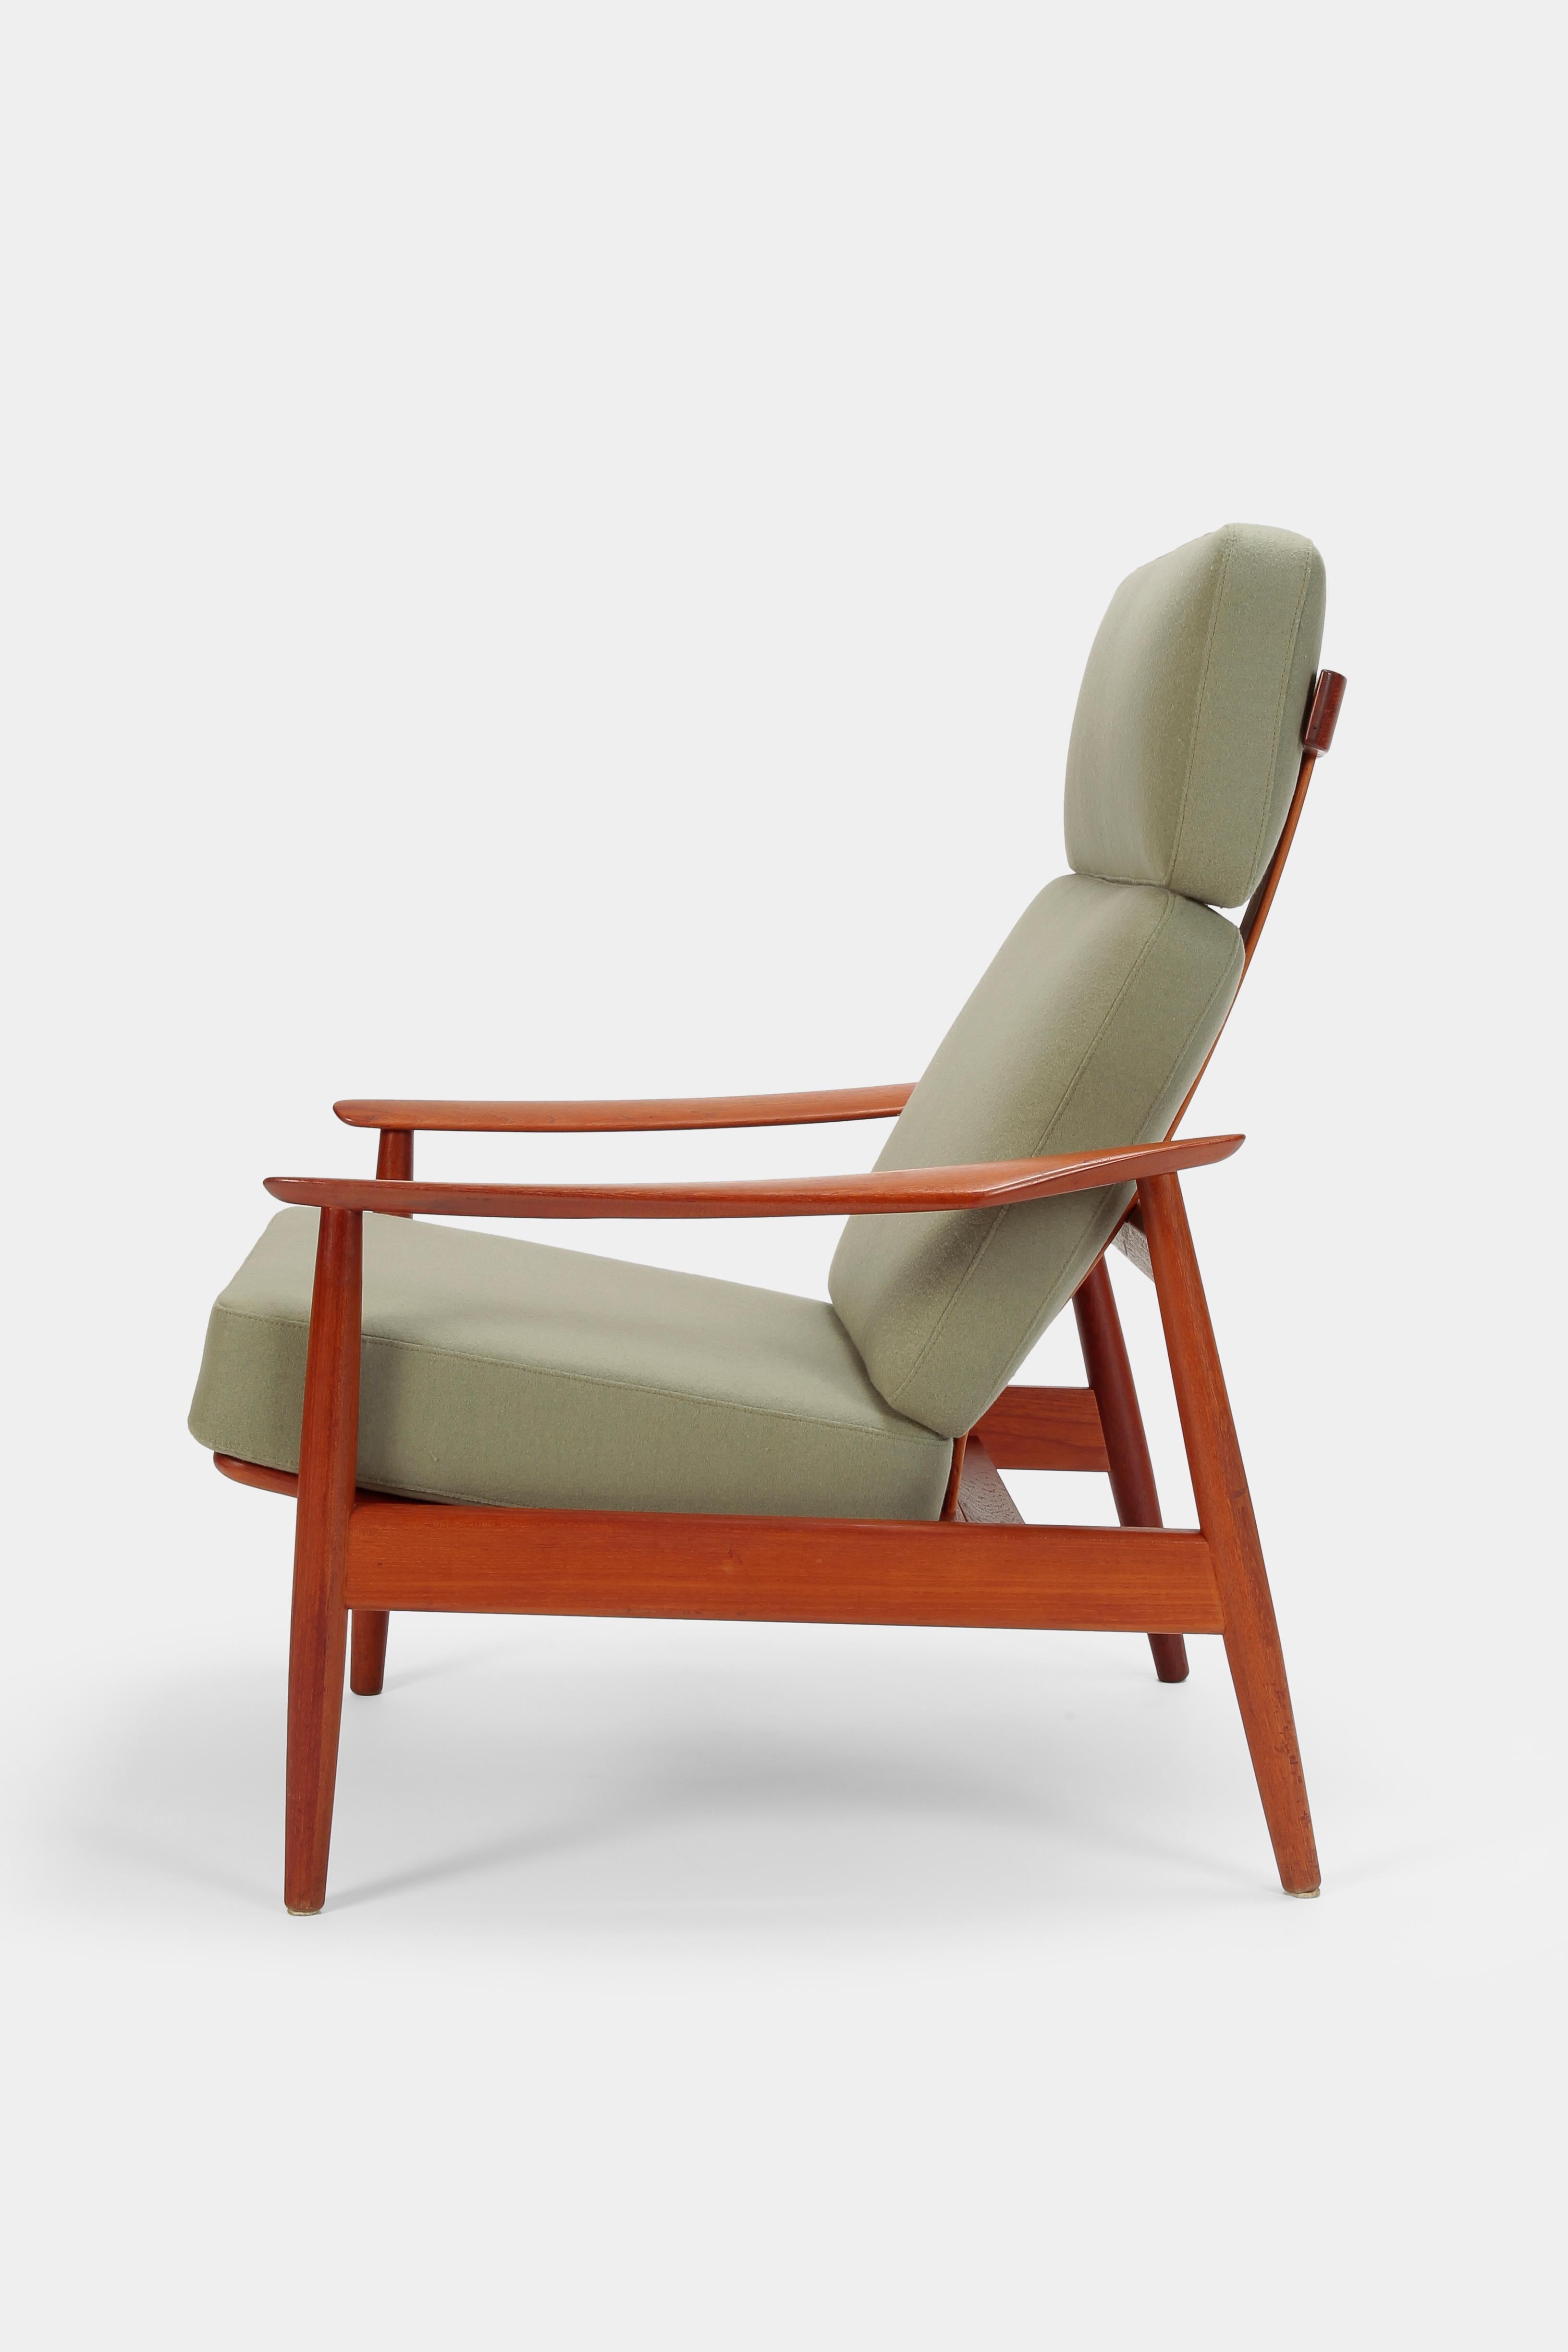 2 Arne Vodder High Back Chairs France & Son Teak, 1960s For Sale 1